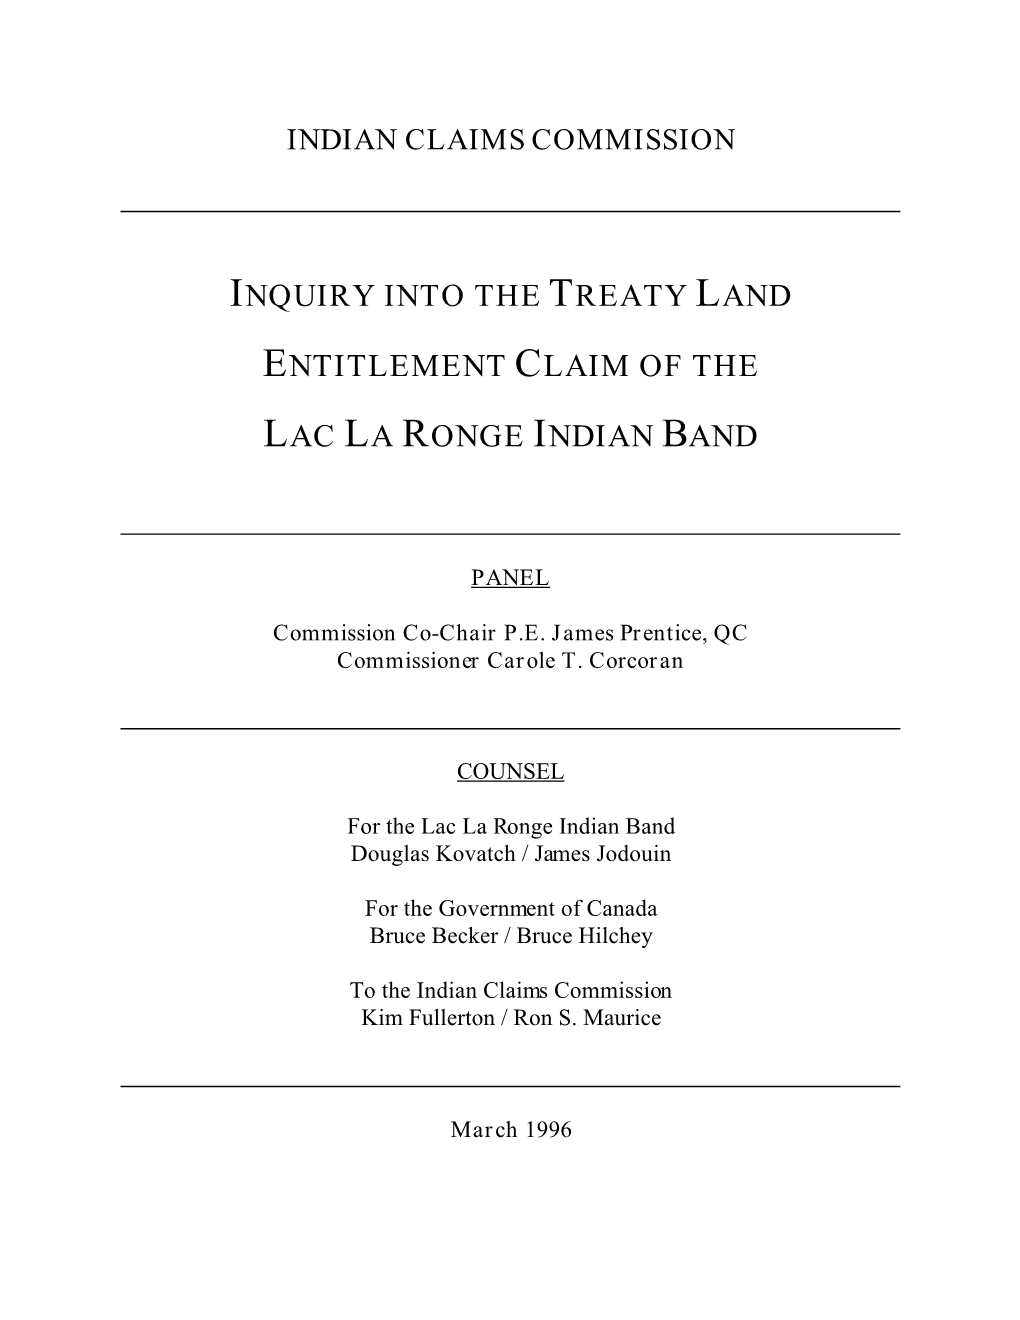 Lac La Ronge Indian Band, Treaty Land Entitlement Inquiry